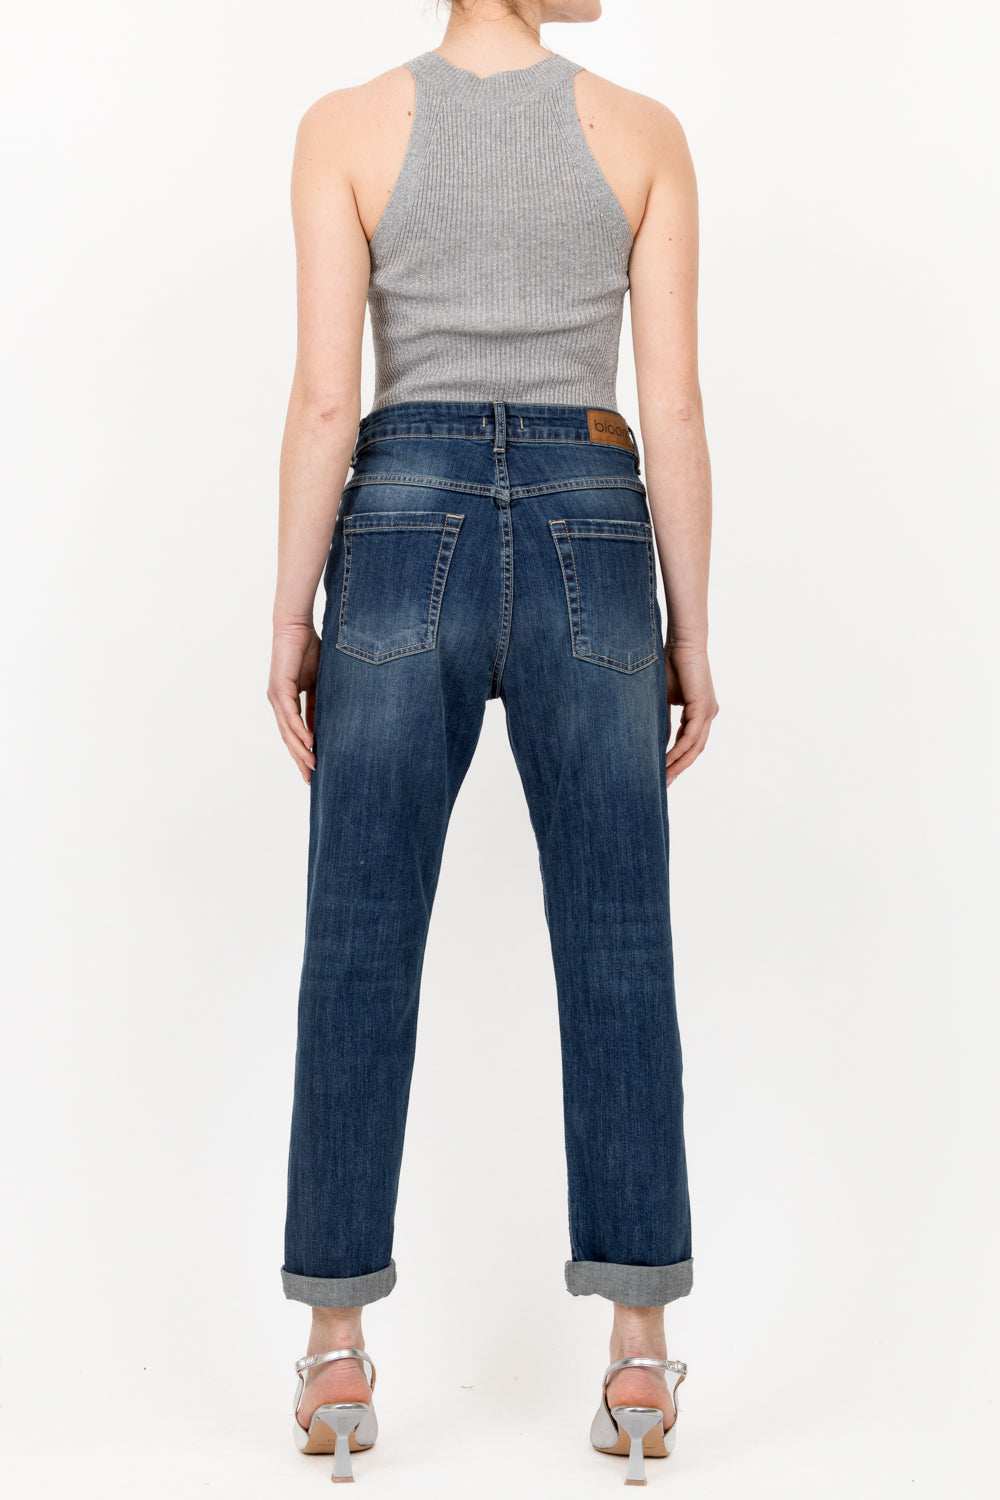 Bloom - Jeans Art. NEW YORK